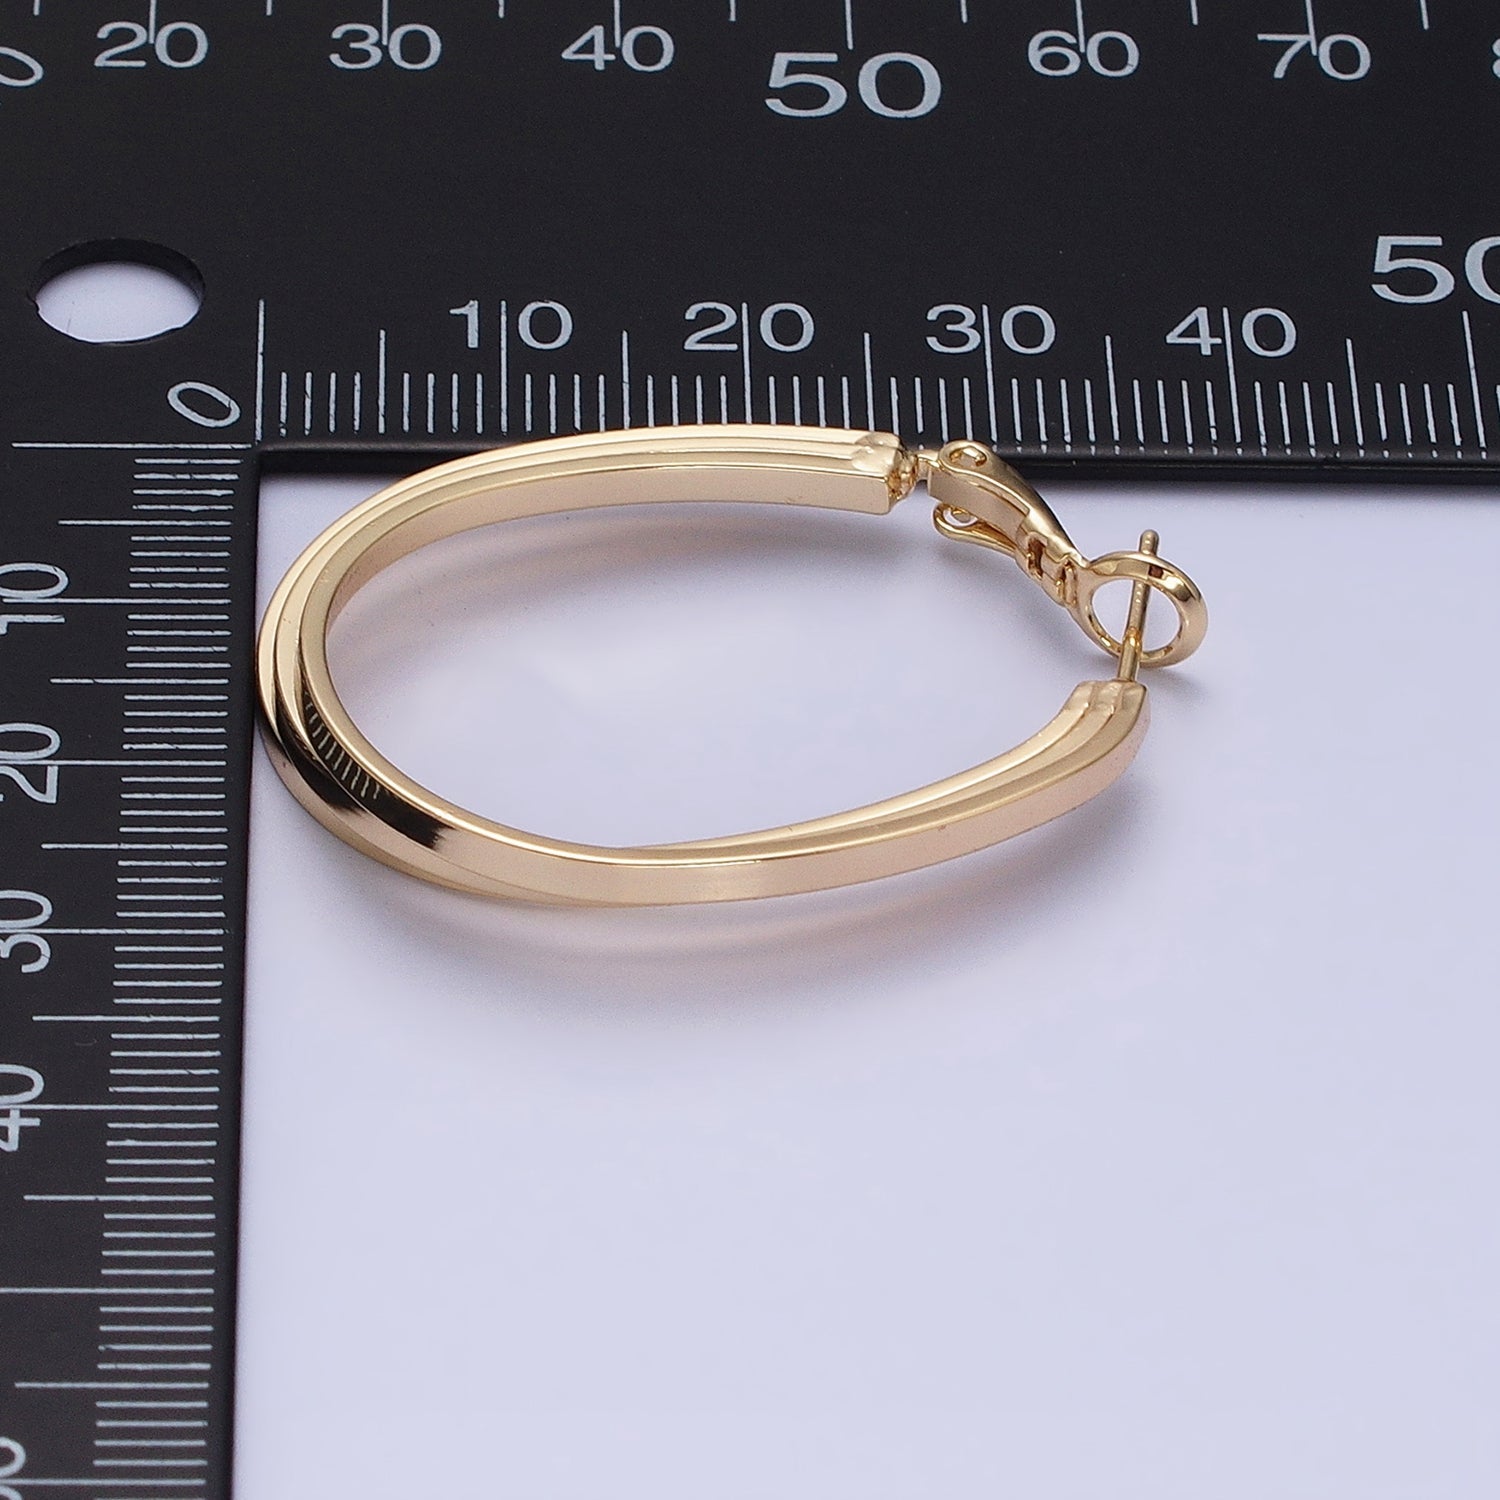 16K Gold Filled Triple Bar Oblong Geometric Hinge Hoop Earrings in Gold & Silver | AD879 AD880 - DLUXCA